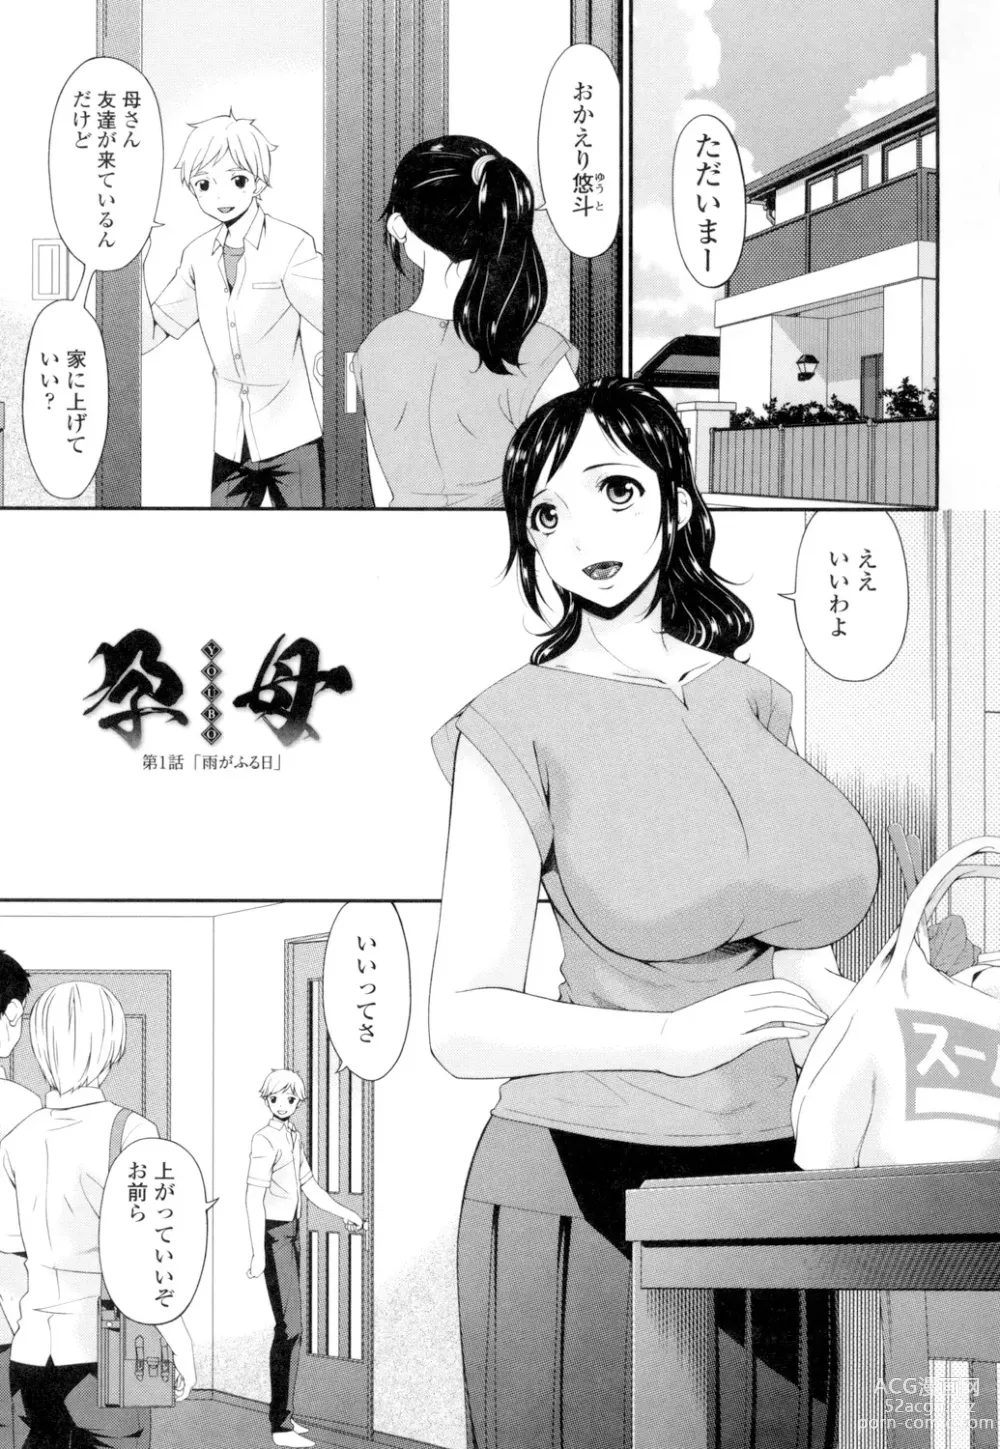 Page 6 of manga Youbo